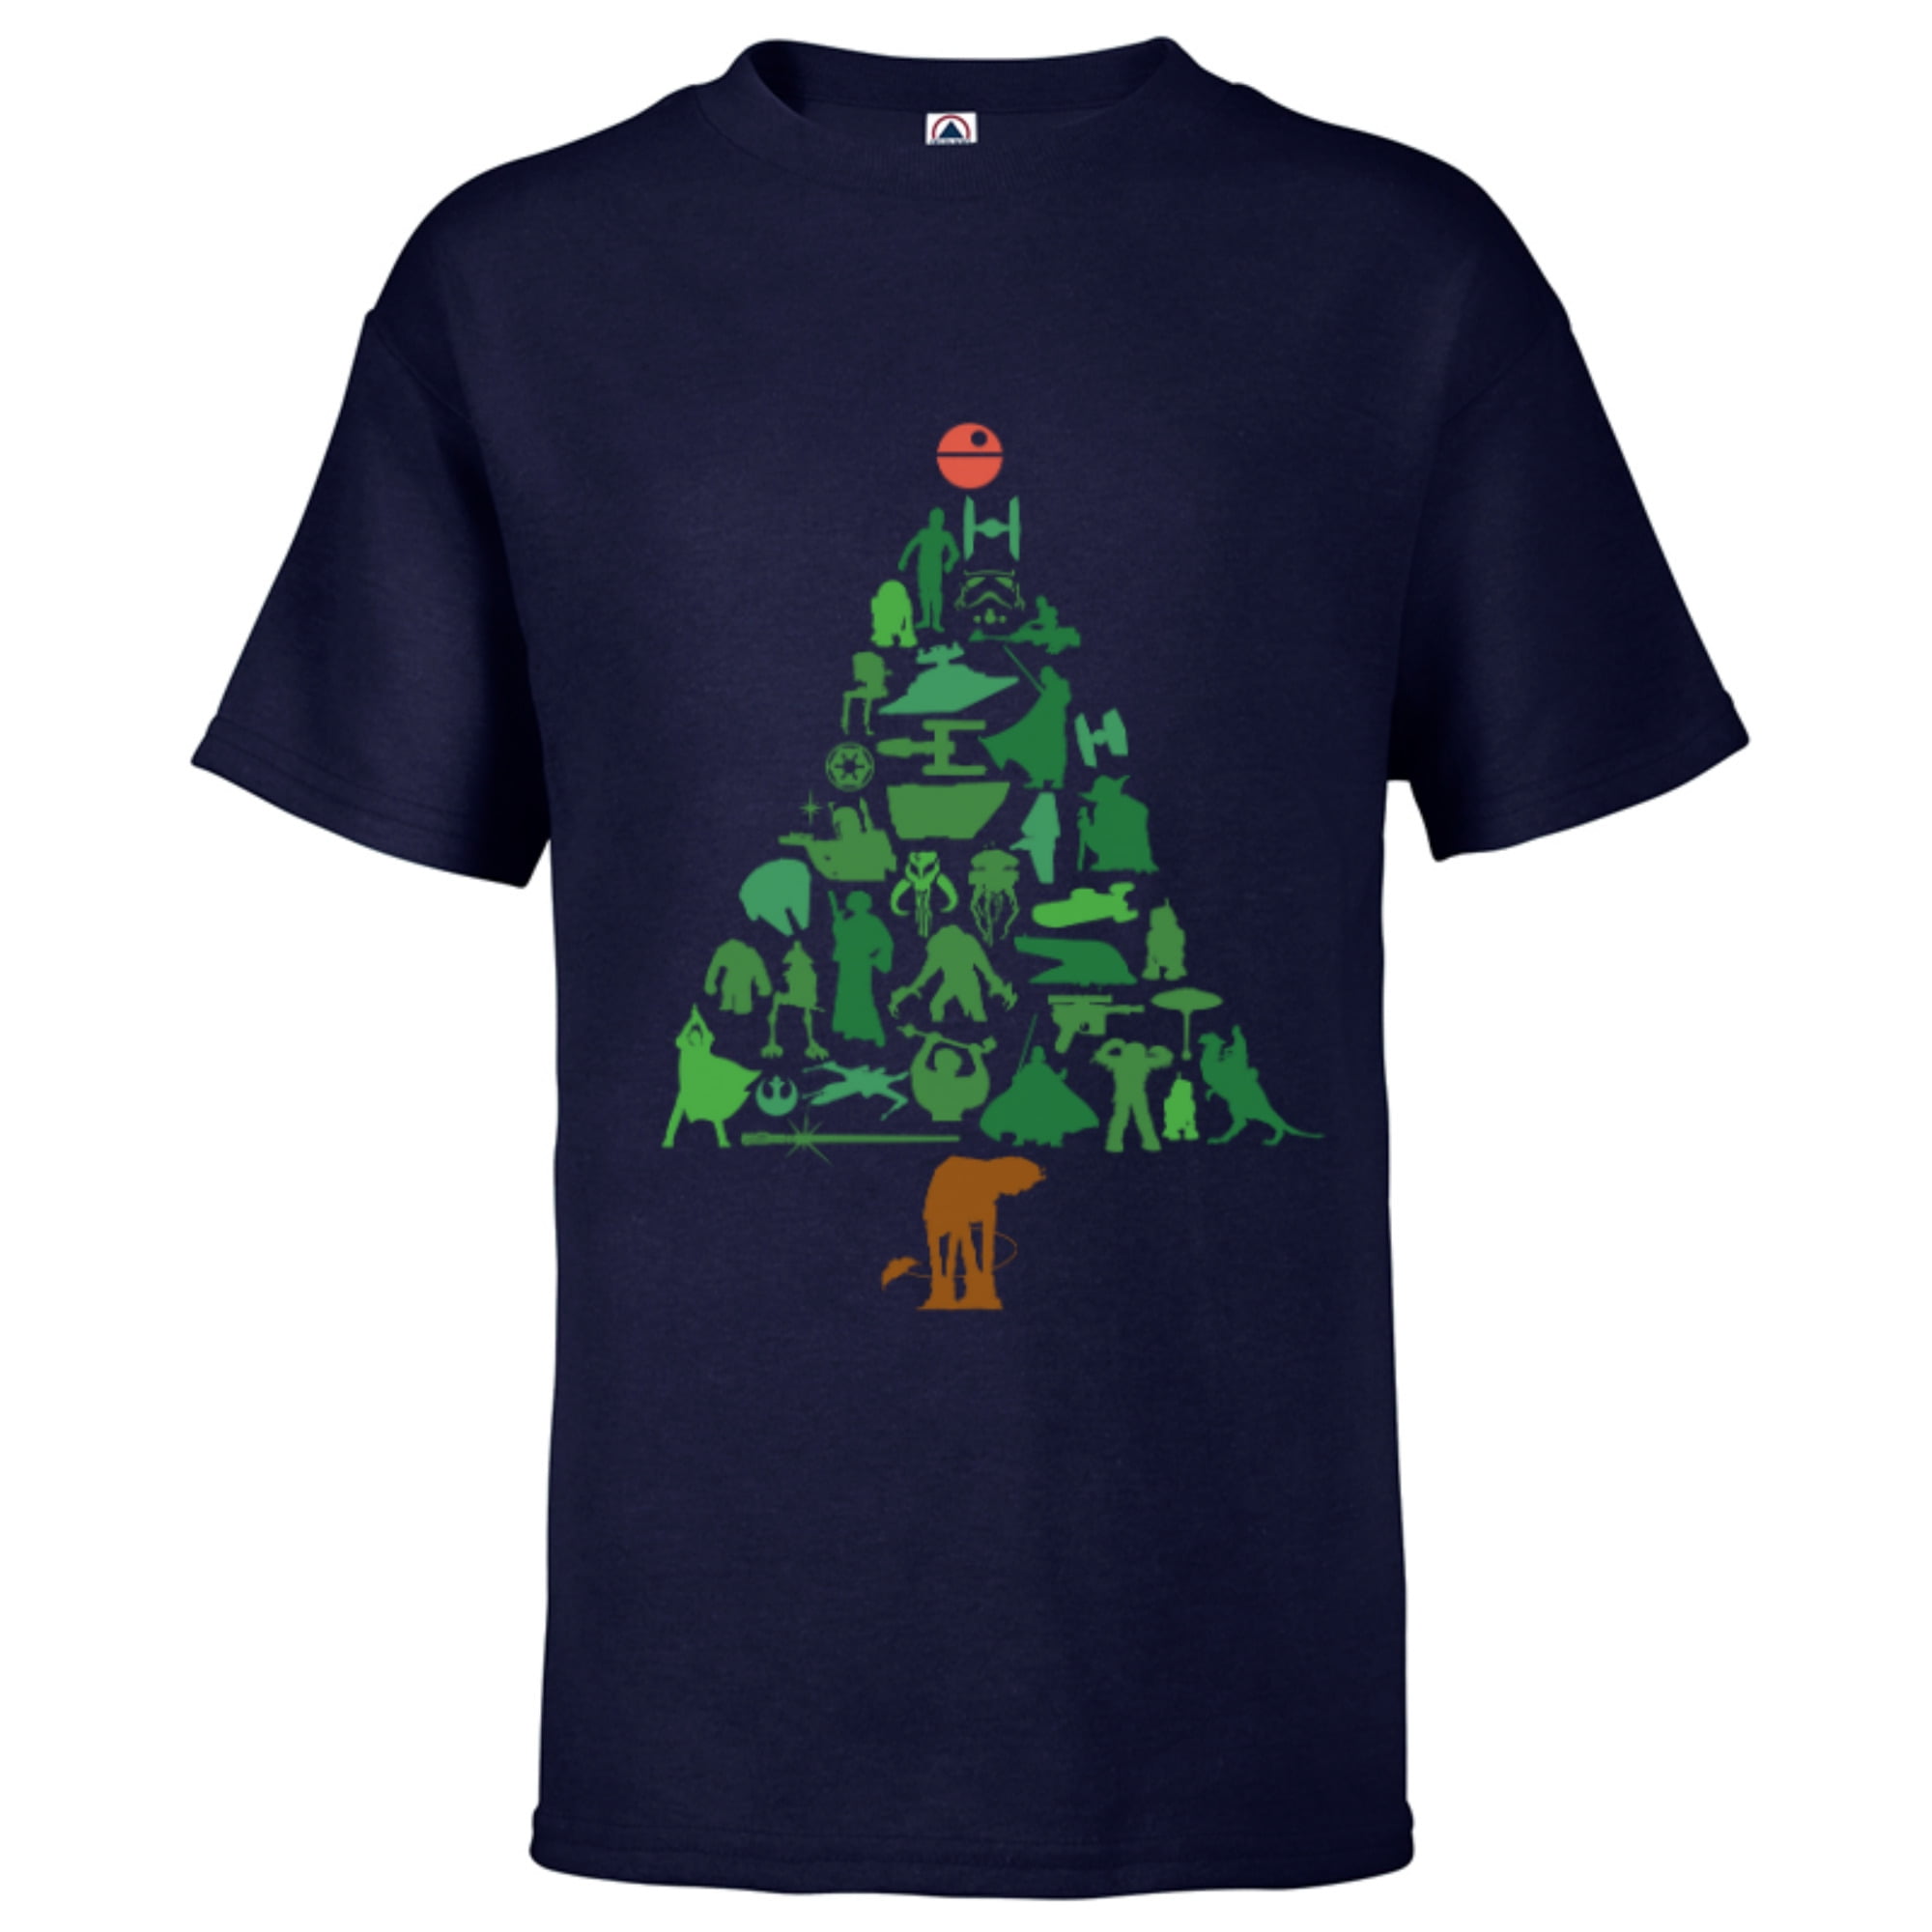 -Customized-Black Tree for - T-Shirt Kids Christmas Holiday Star Short Wars Sleeve